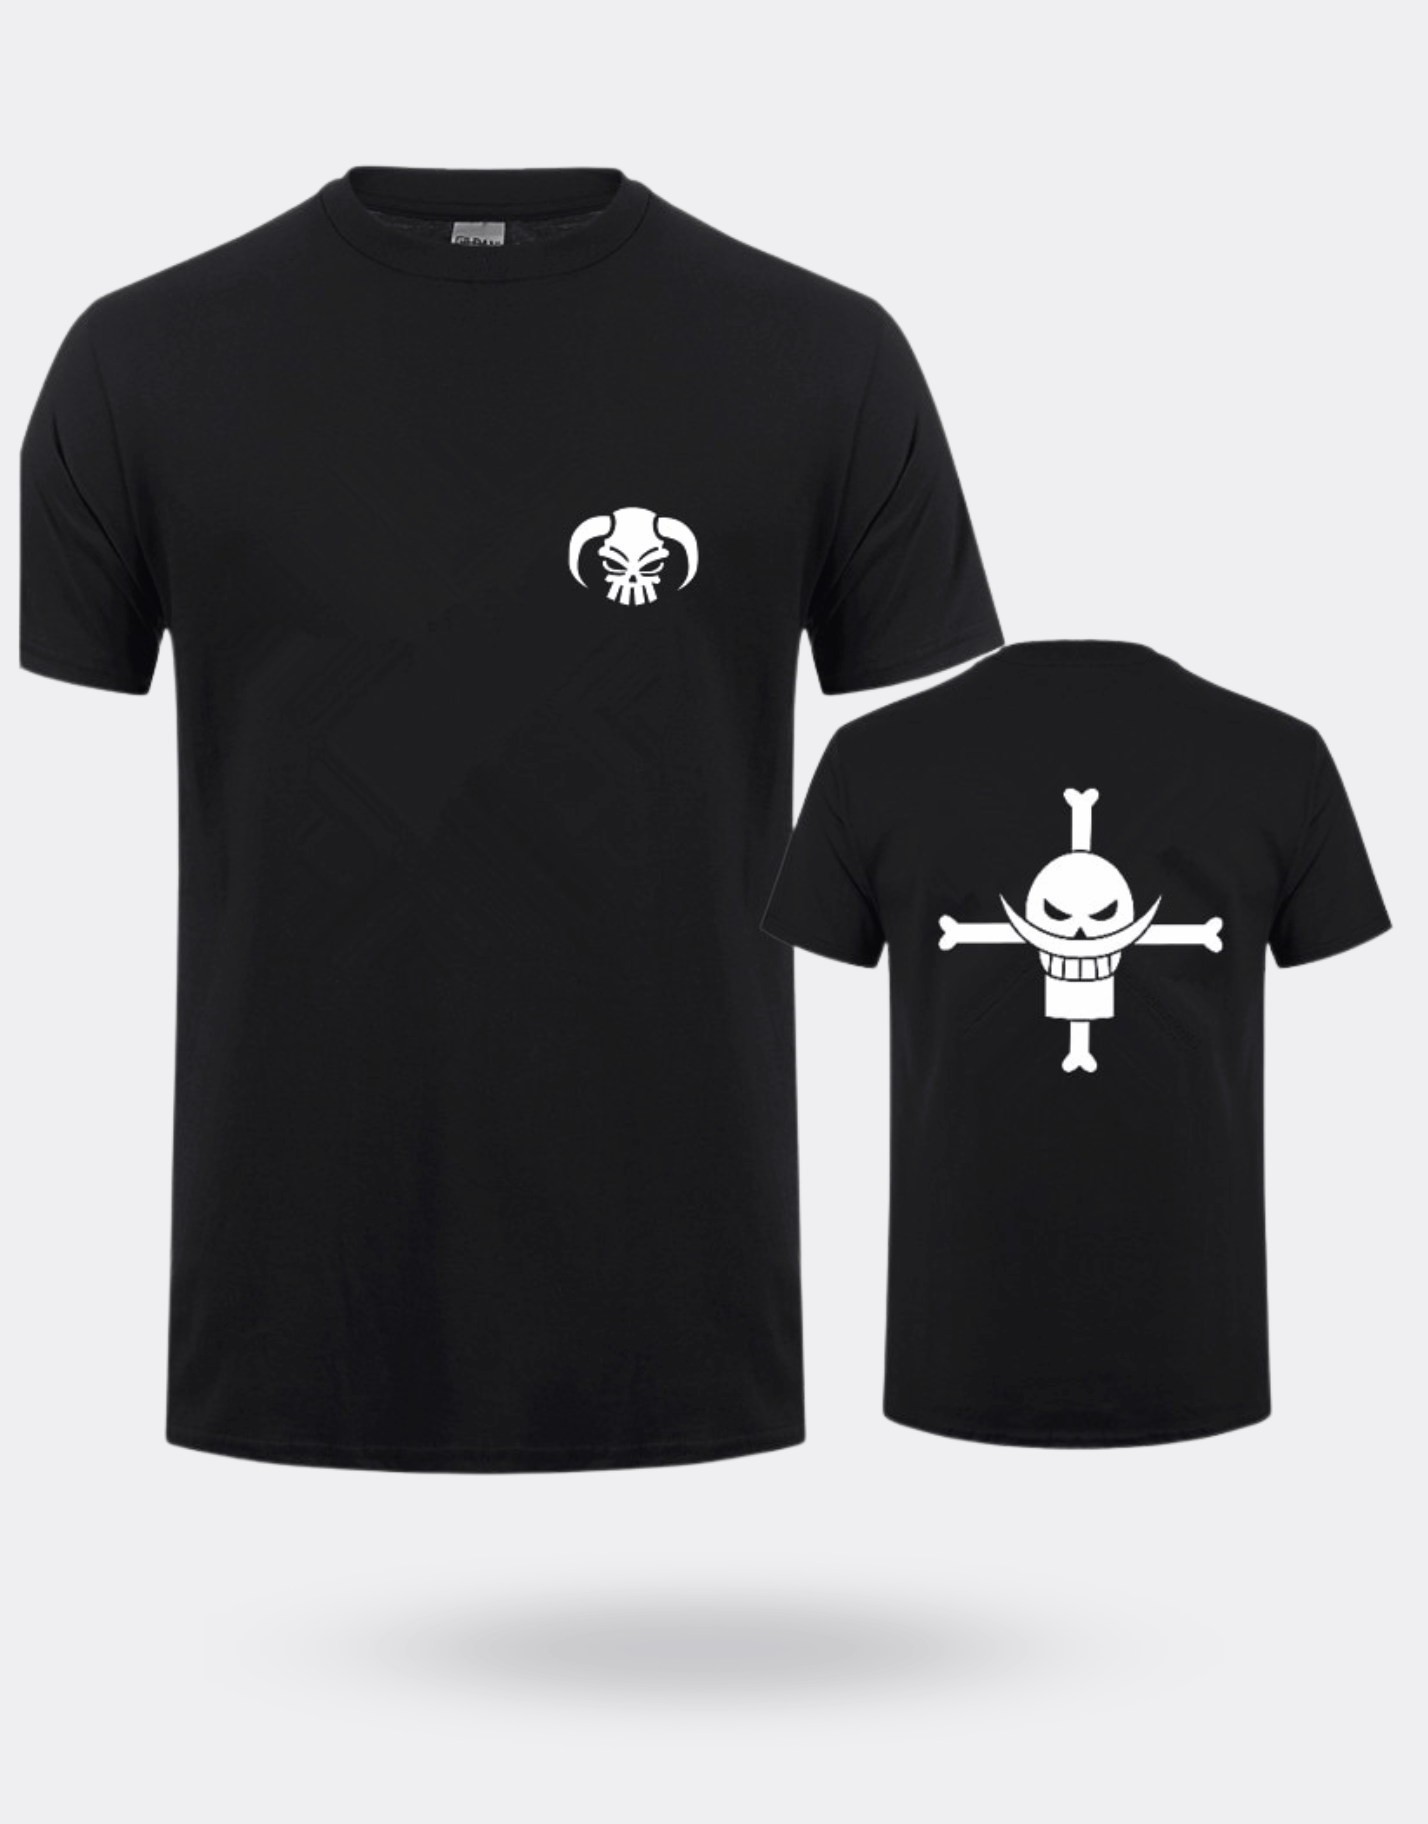 T-shirt One Piece logo pirate noir et blanc